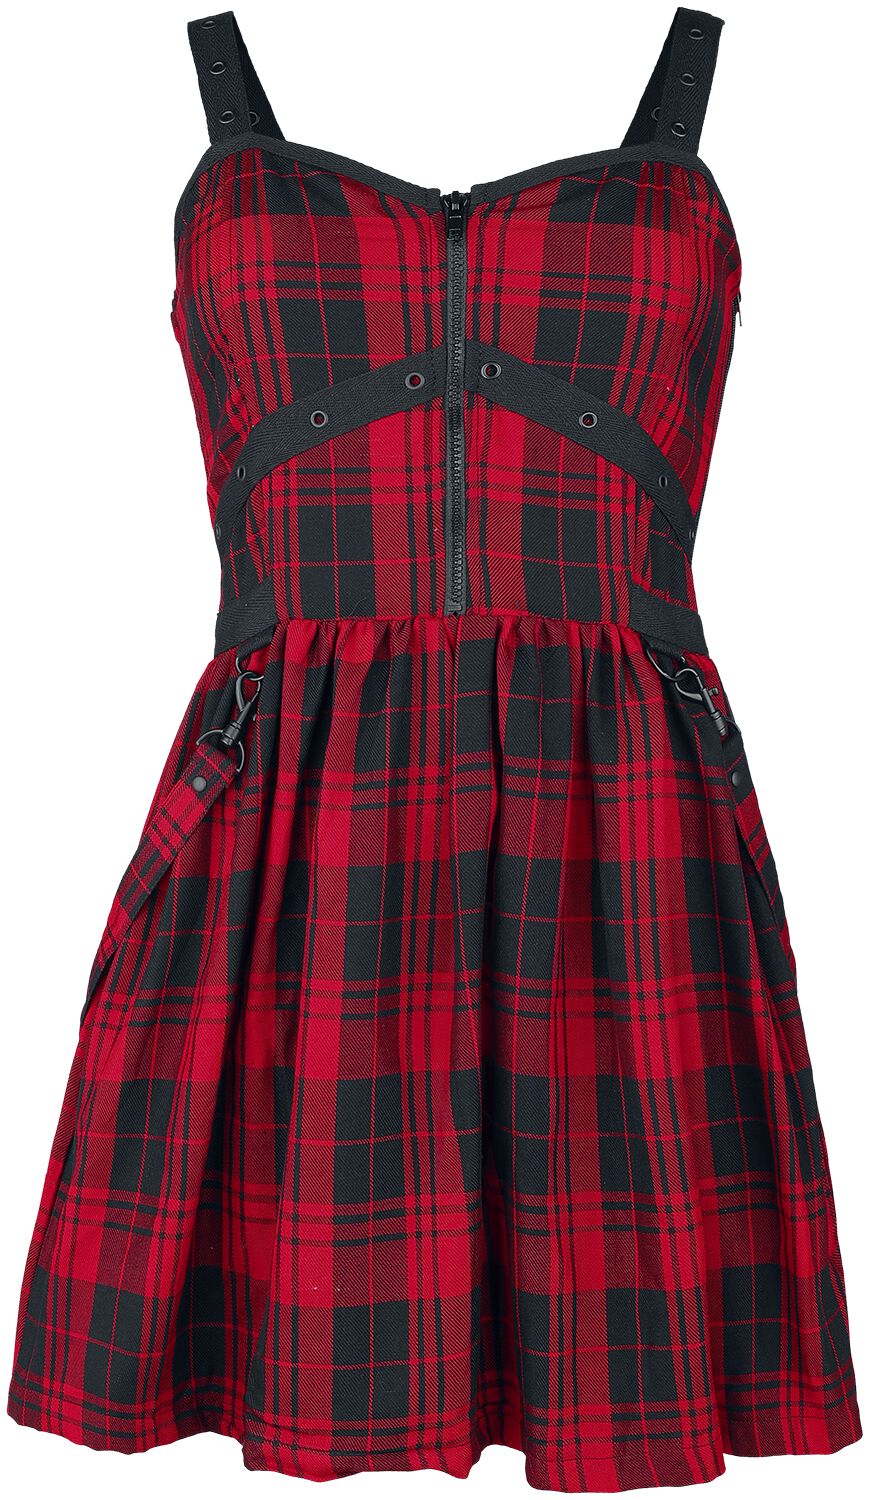 Heartless Eclipse Dress Kurzes Kleid schwarz rot in XXL